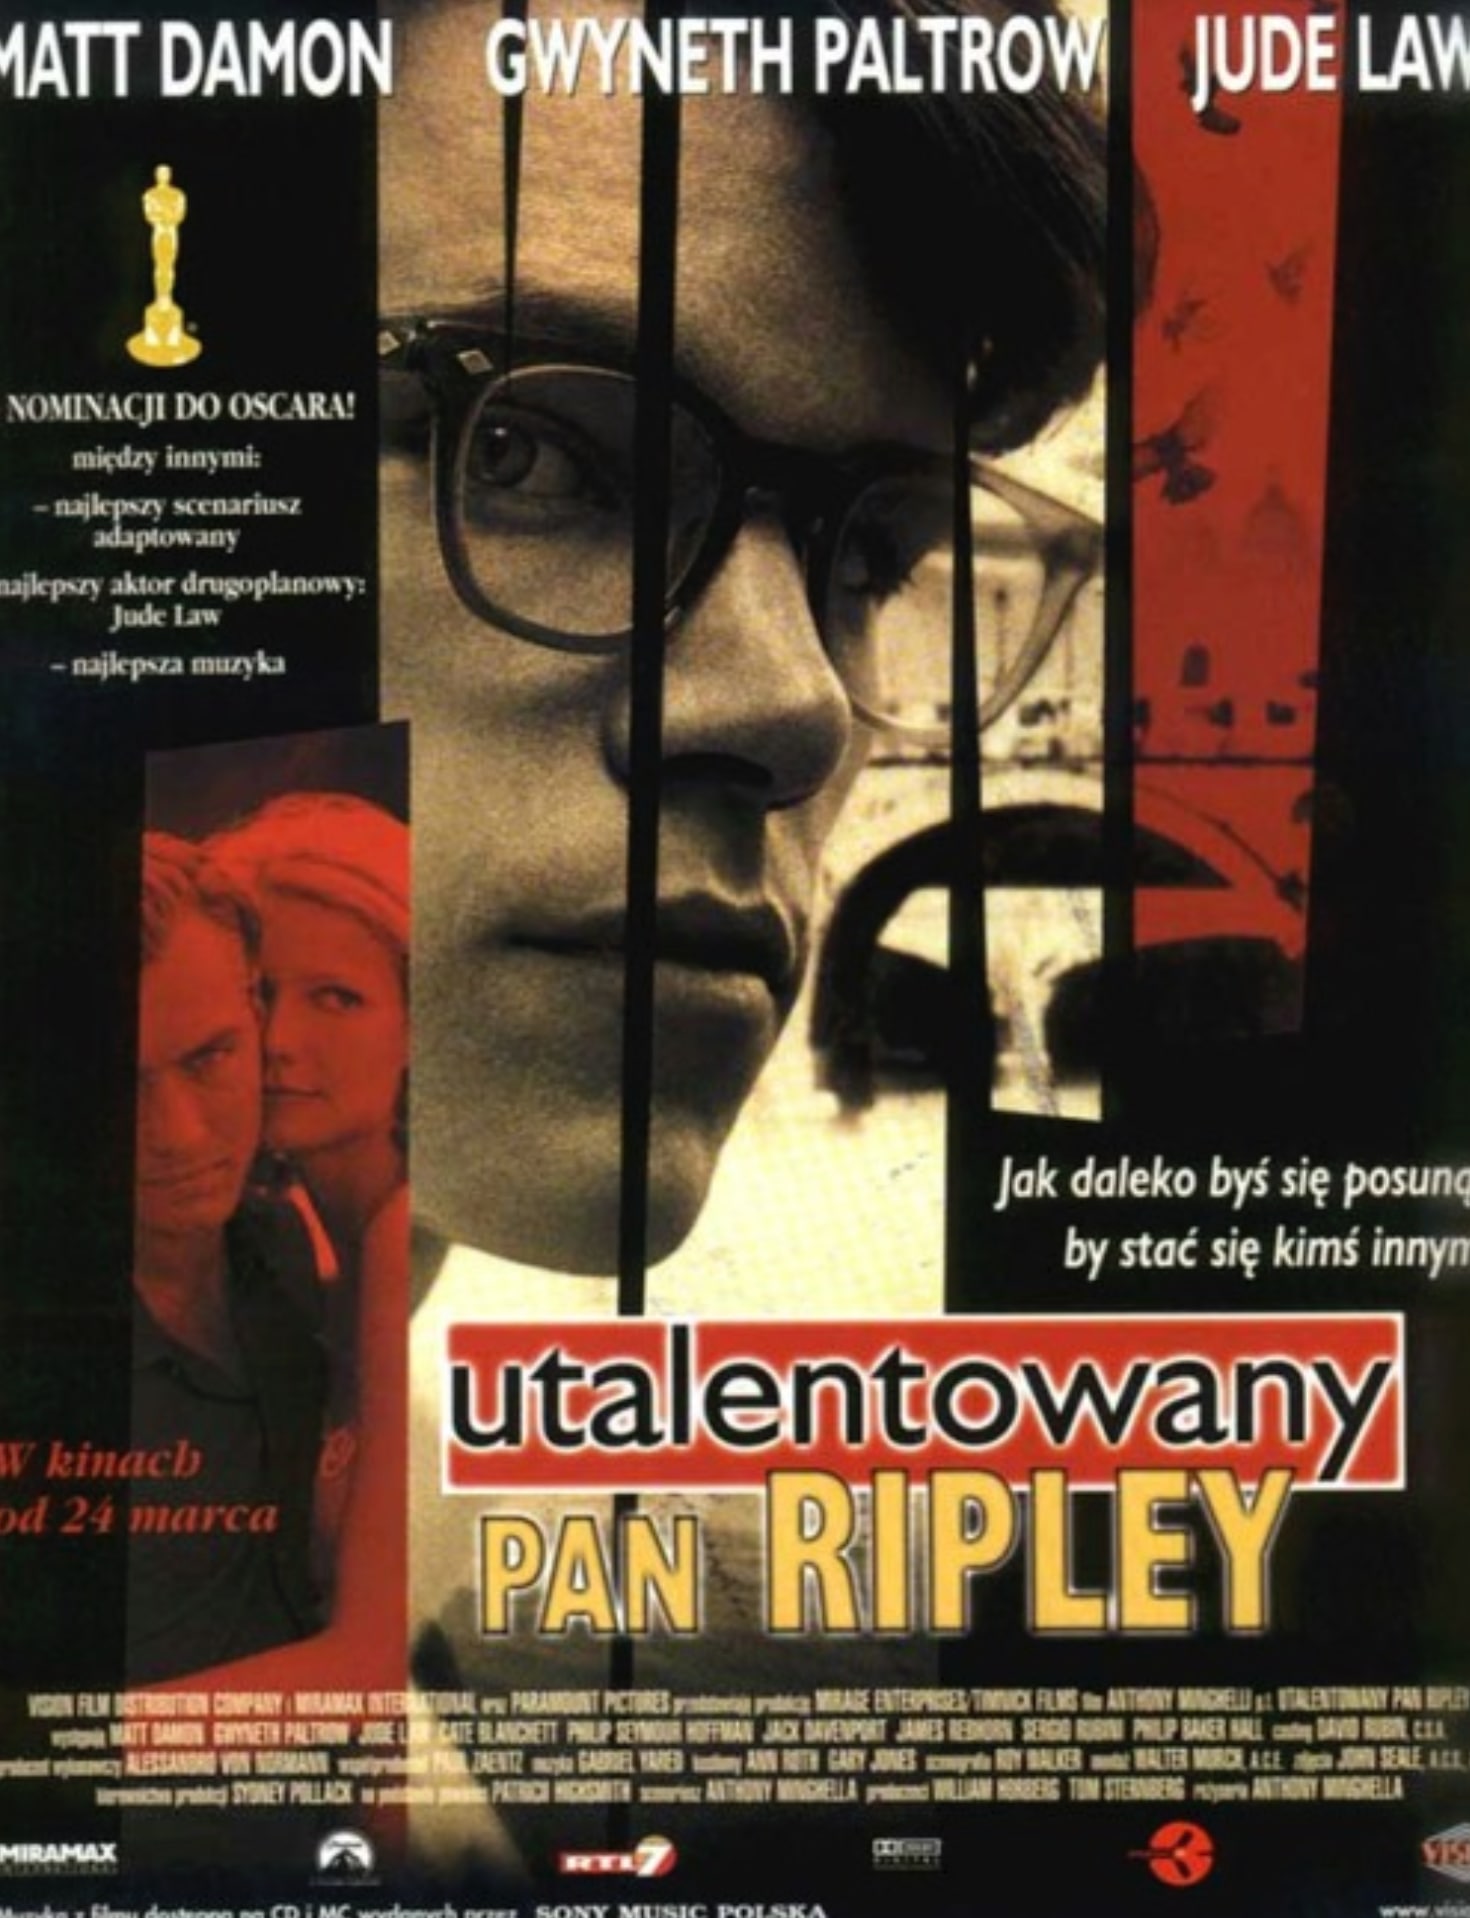 Plakat - Utalentowany pan Ripley